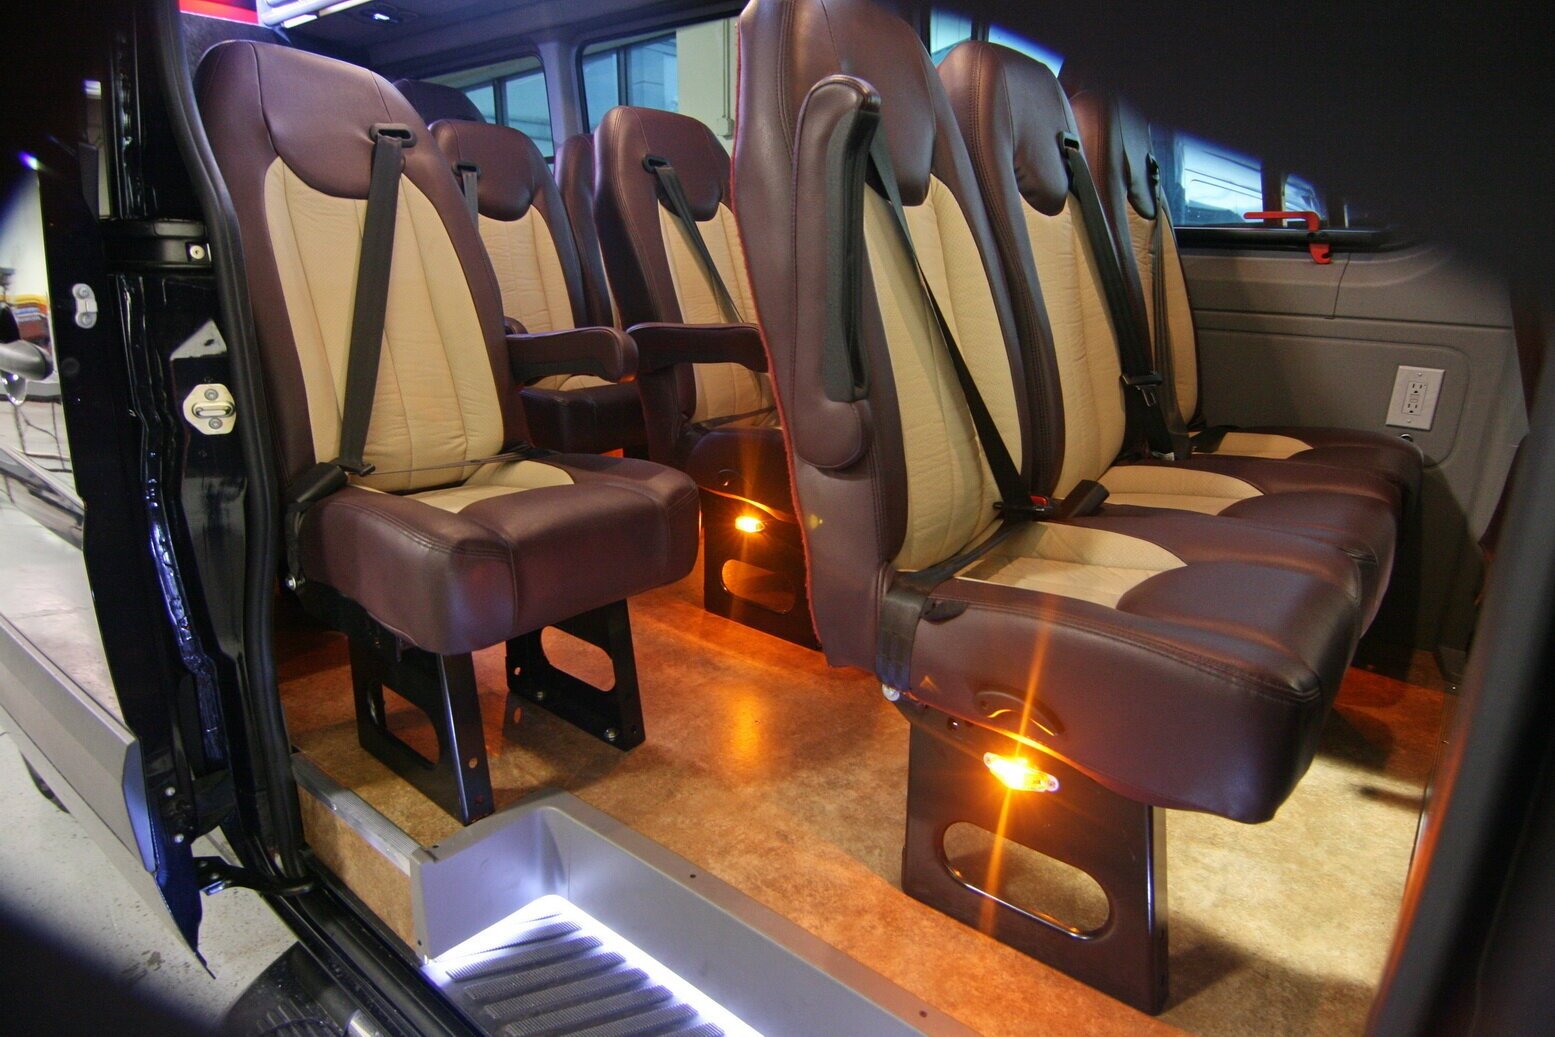 Executive Van Bus Inside - Seats